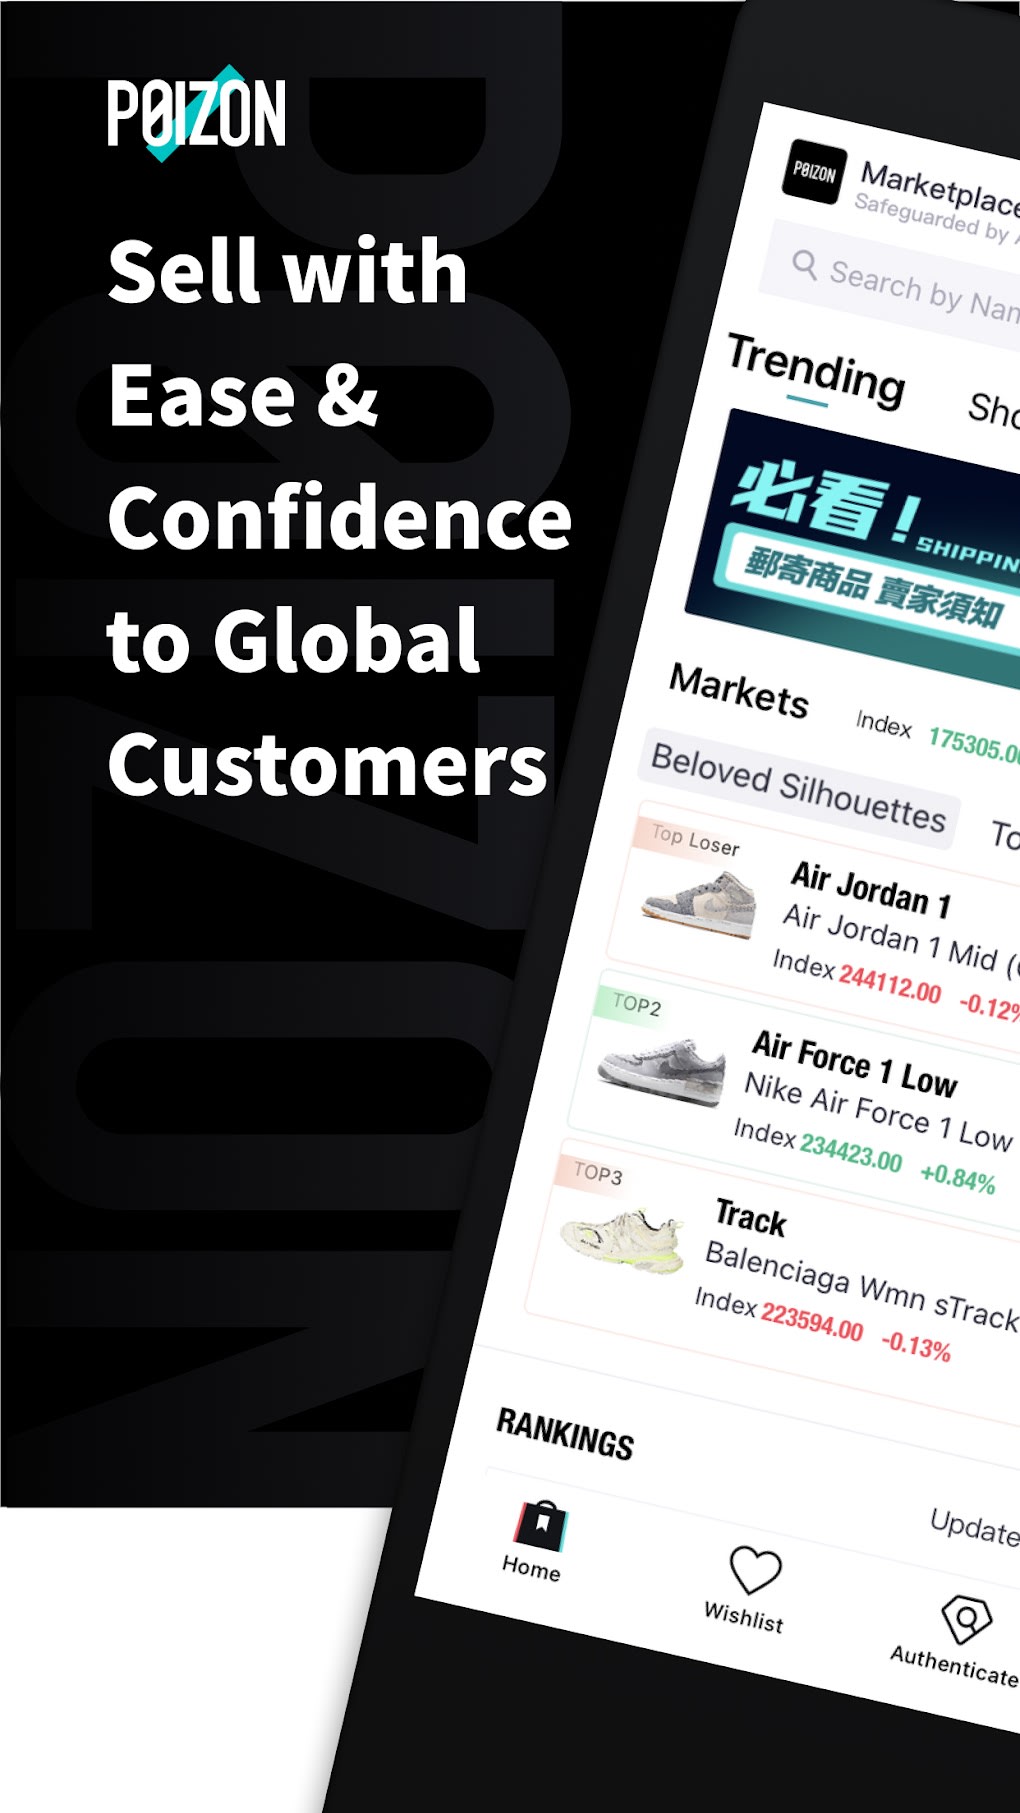 POIZON - Sneakers & Apparel APK (Android App) - Free Download